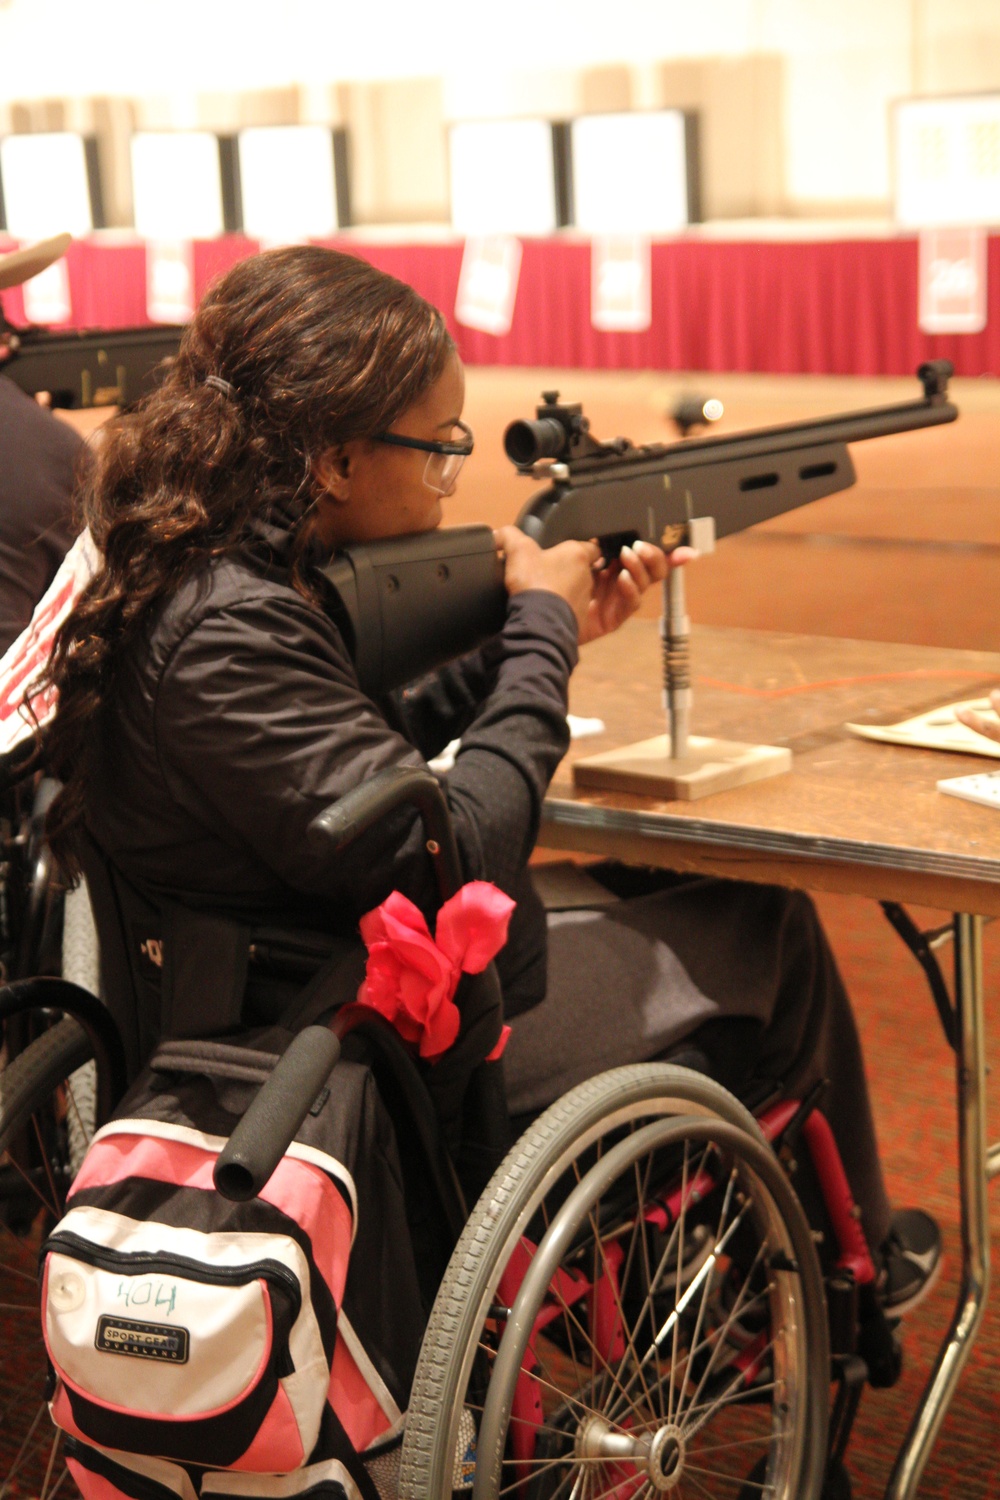 Navy veteran overcomes adversity, wins gold at wheelchair games